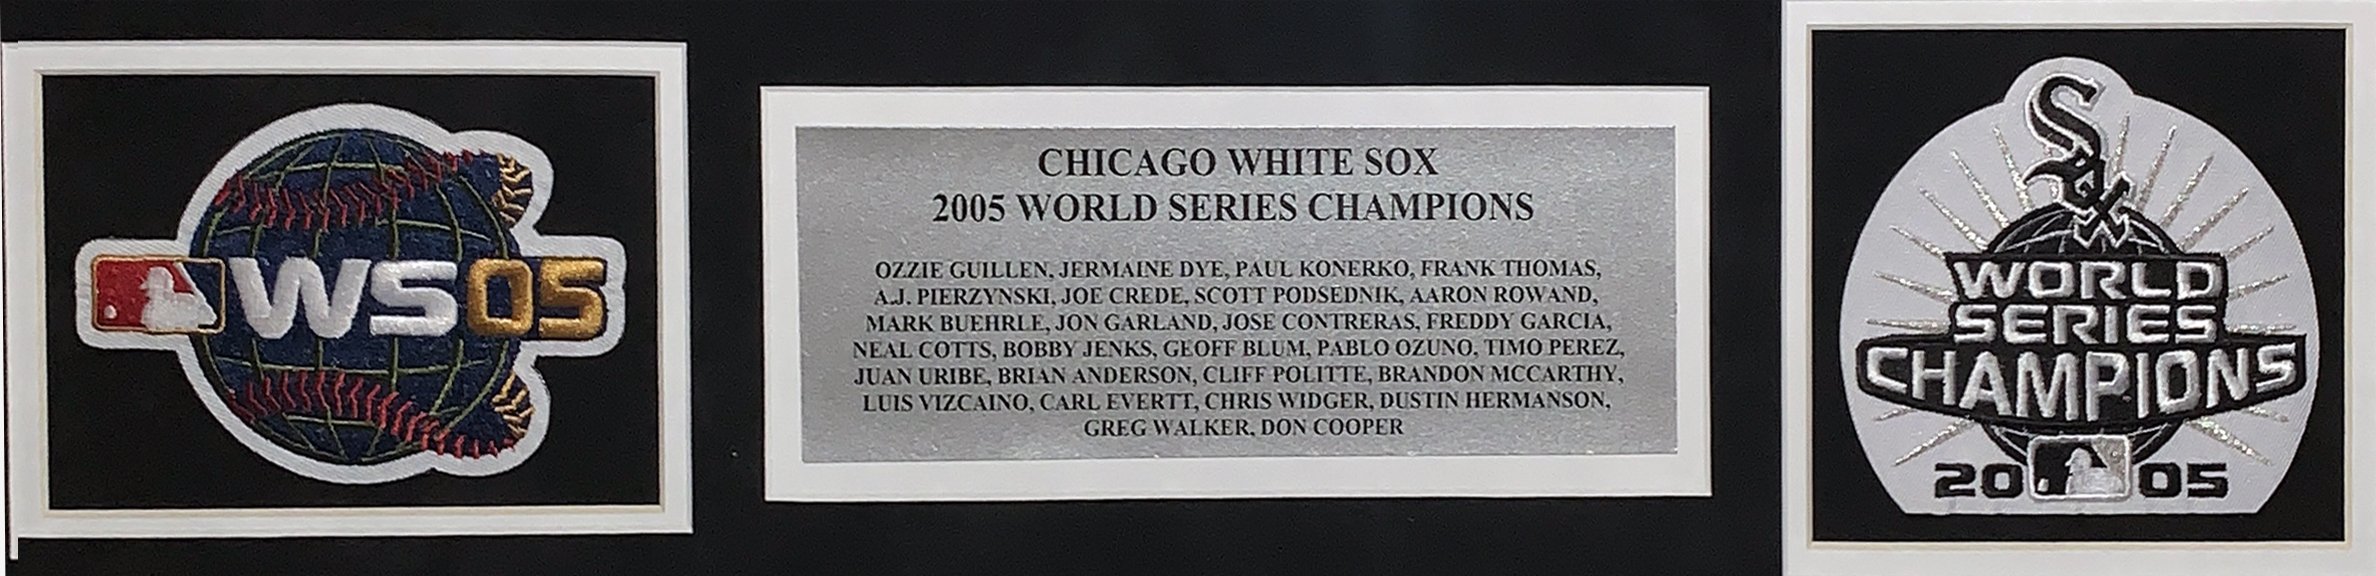 Chicago 2005 White Sox World Series Champs Team Photo 8X10 SATIN Photo  LIMITED STOCK 